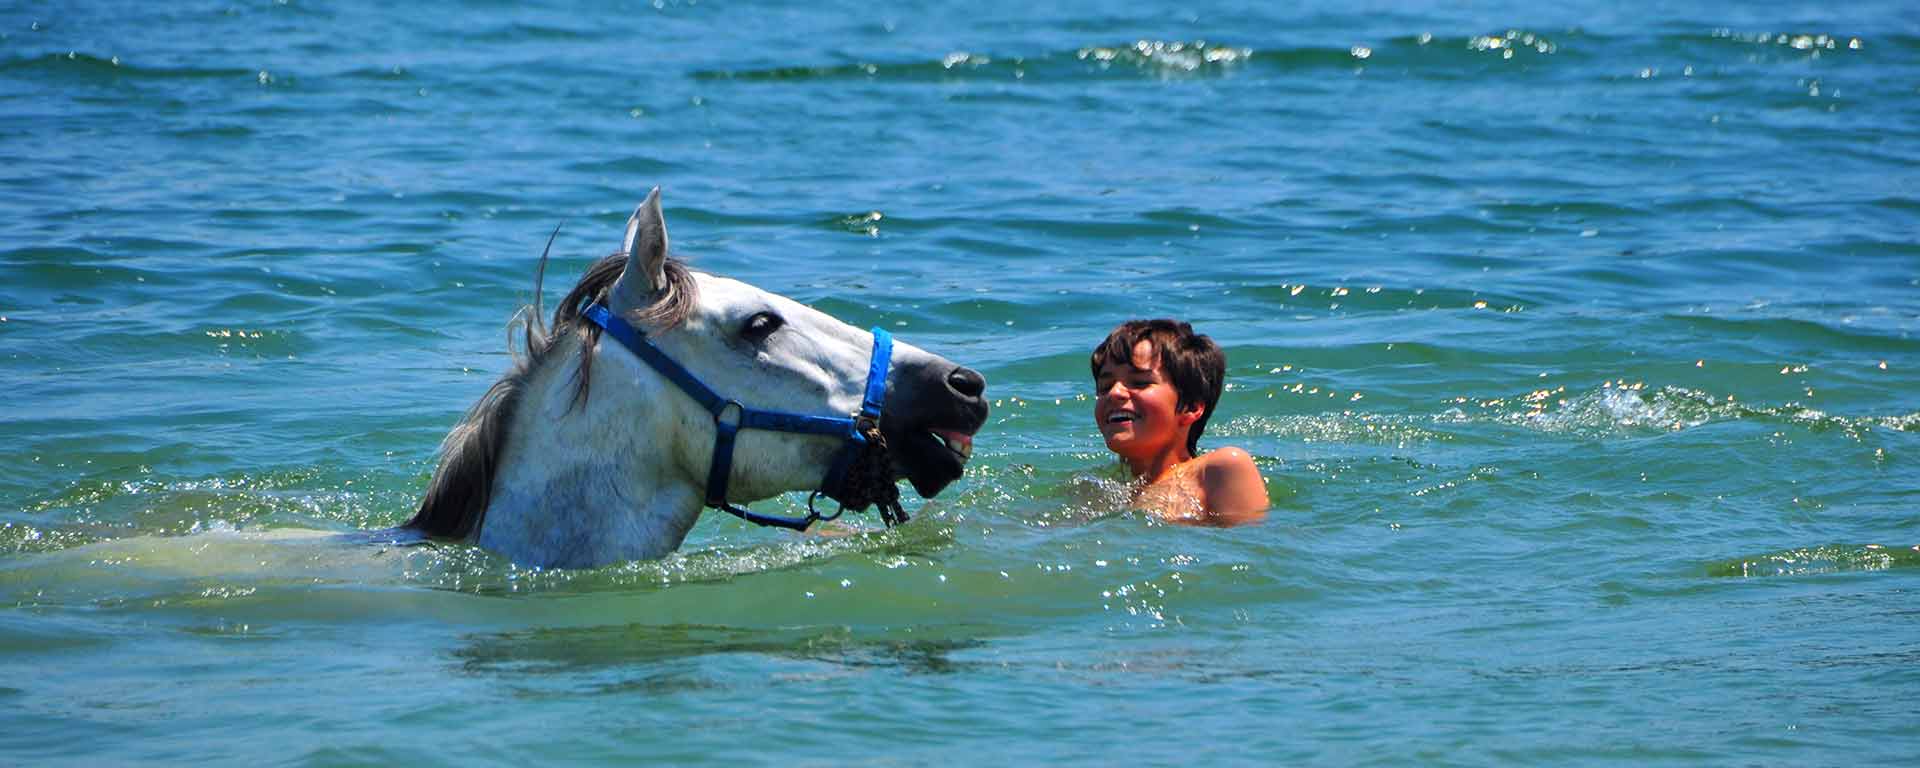  Catalonia on horseback – Swimming with horses